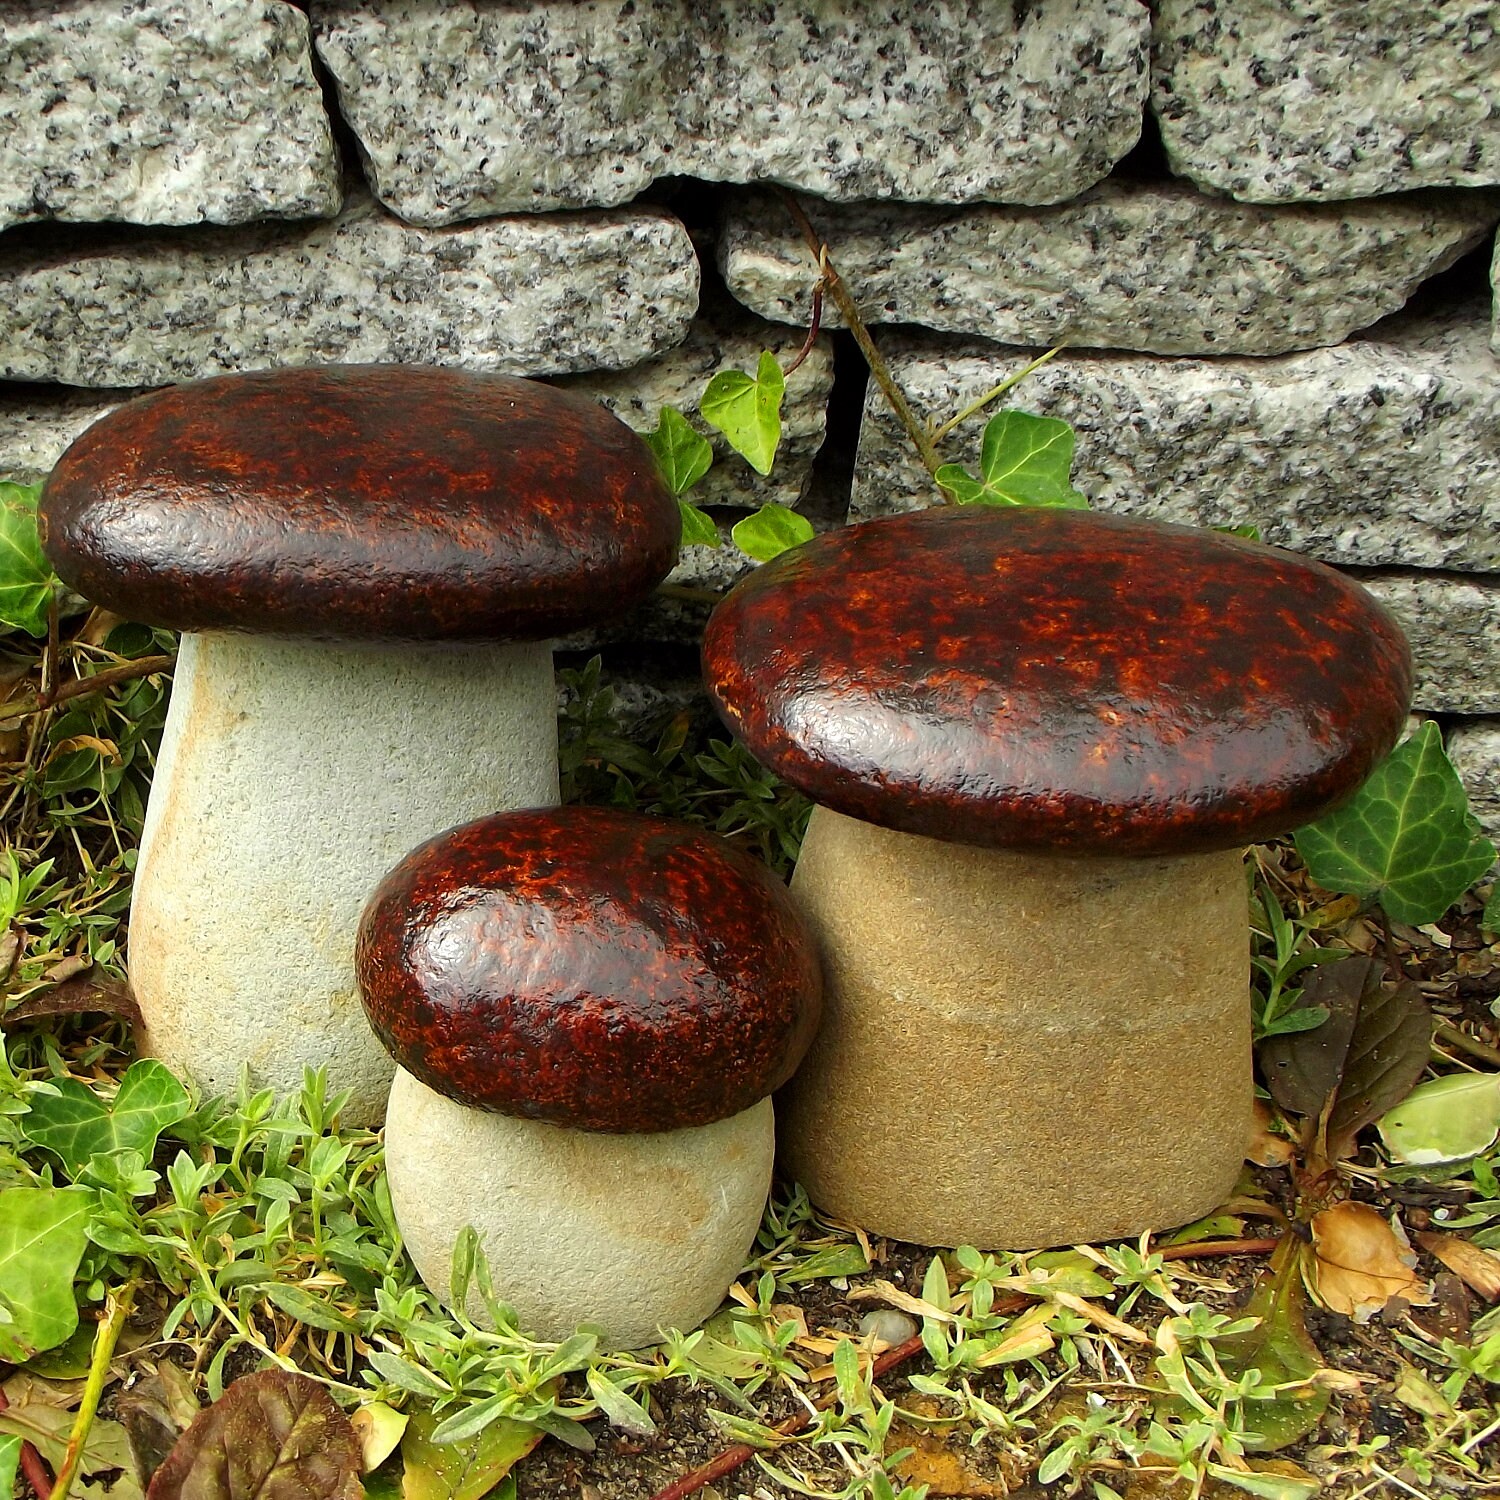 Fairy Garden Kit Fake Mushrooms, Mushroom Sculpture for Terrarium